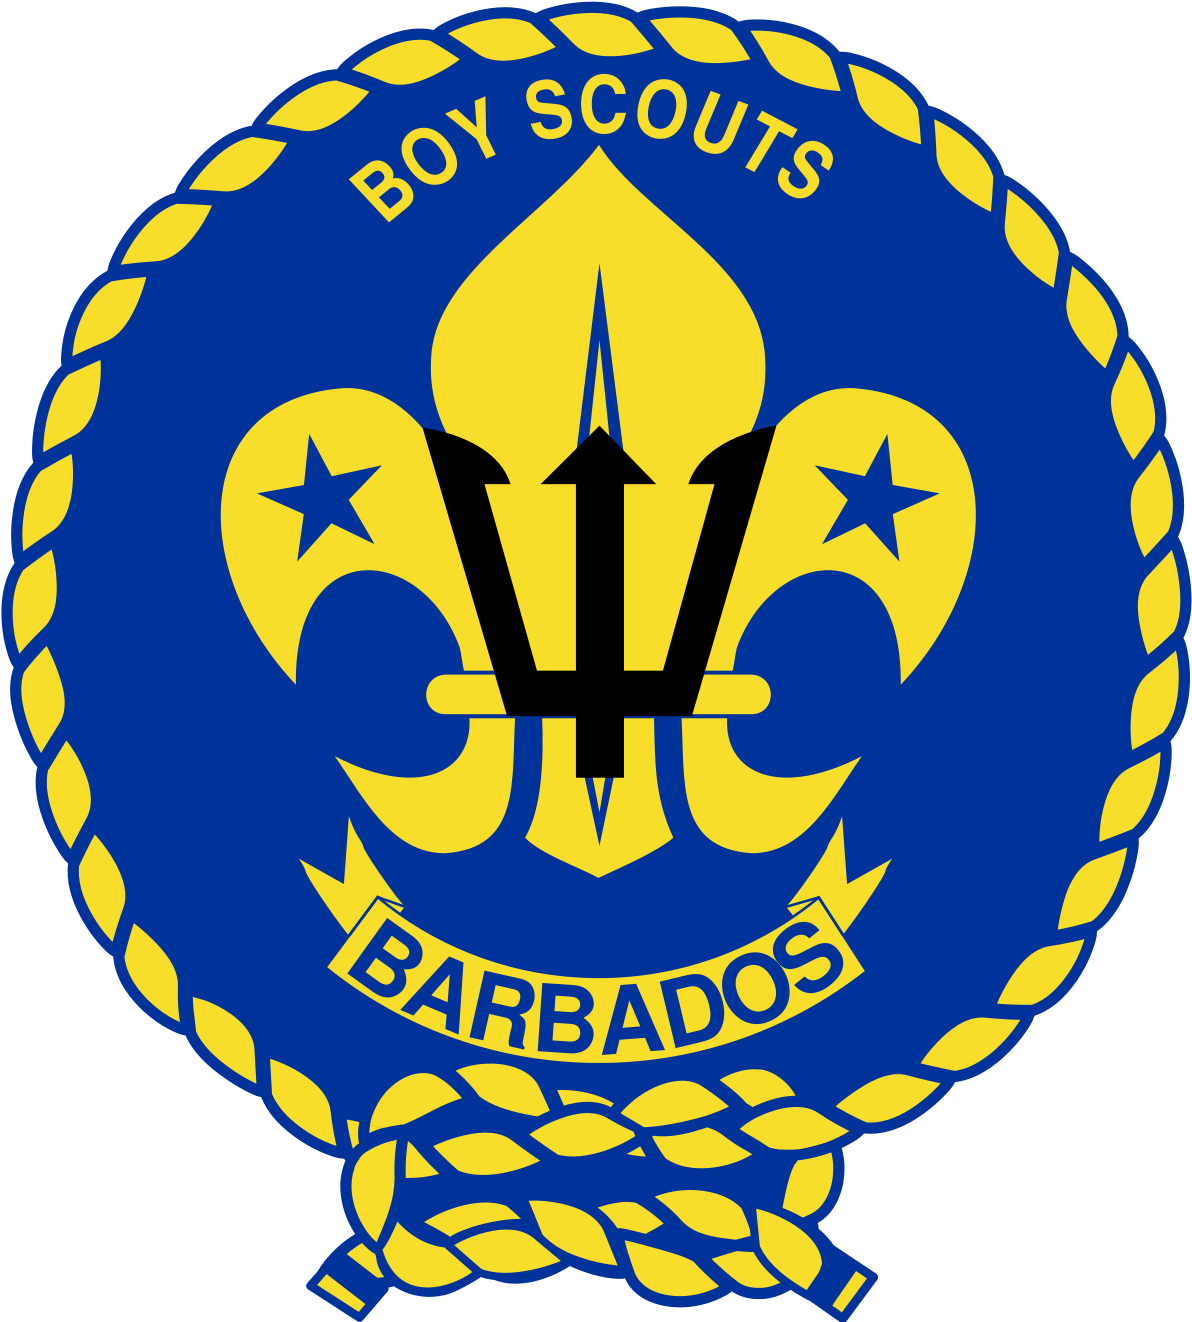 Barbados Boy Scouts Association (1200x1321)